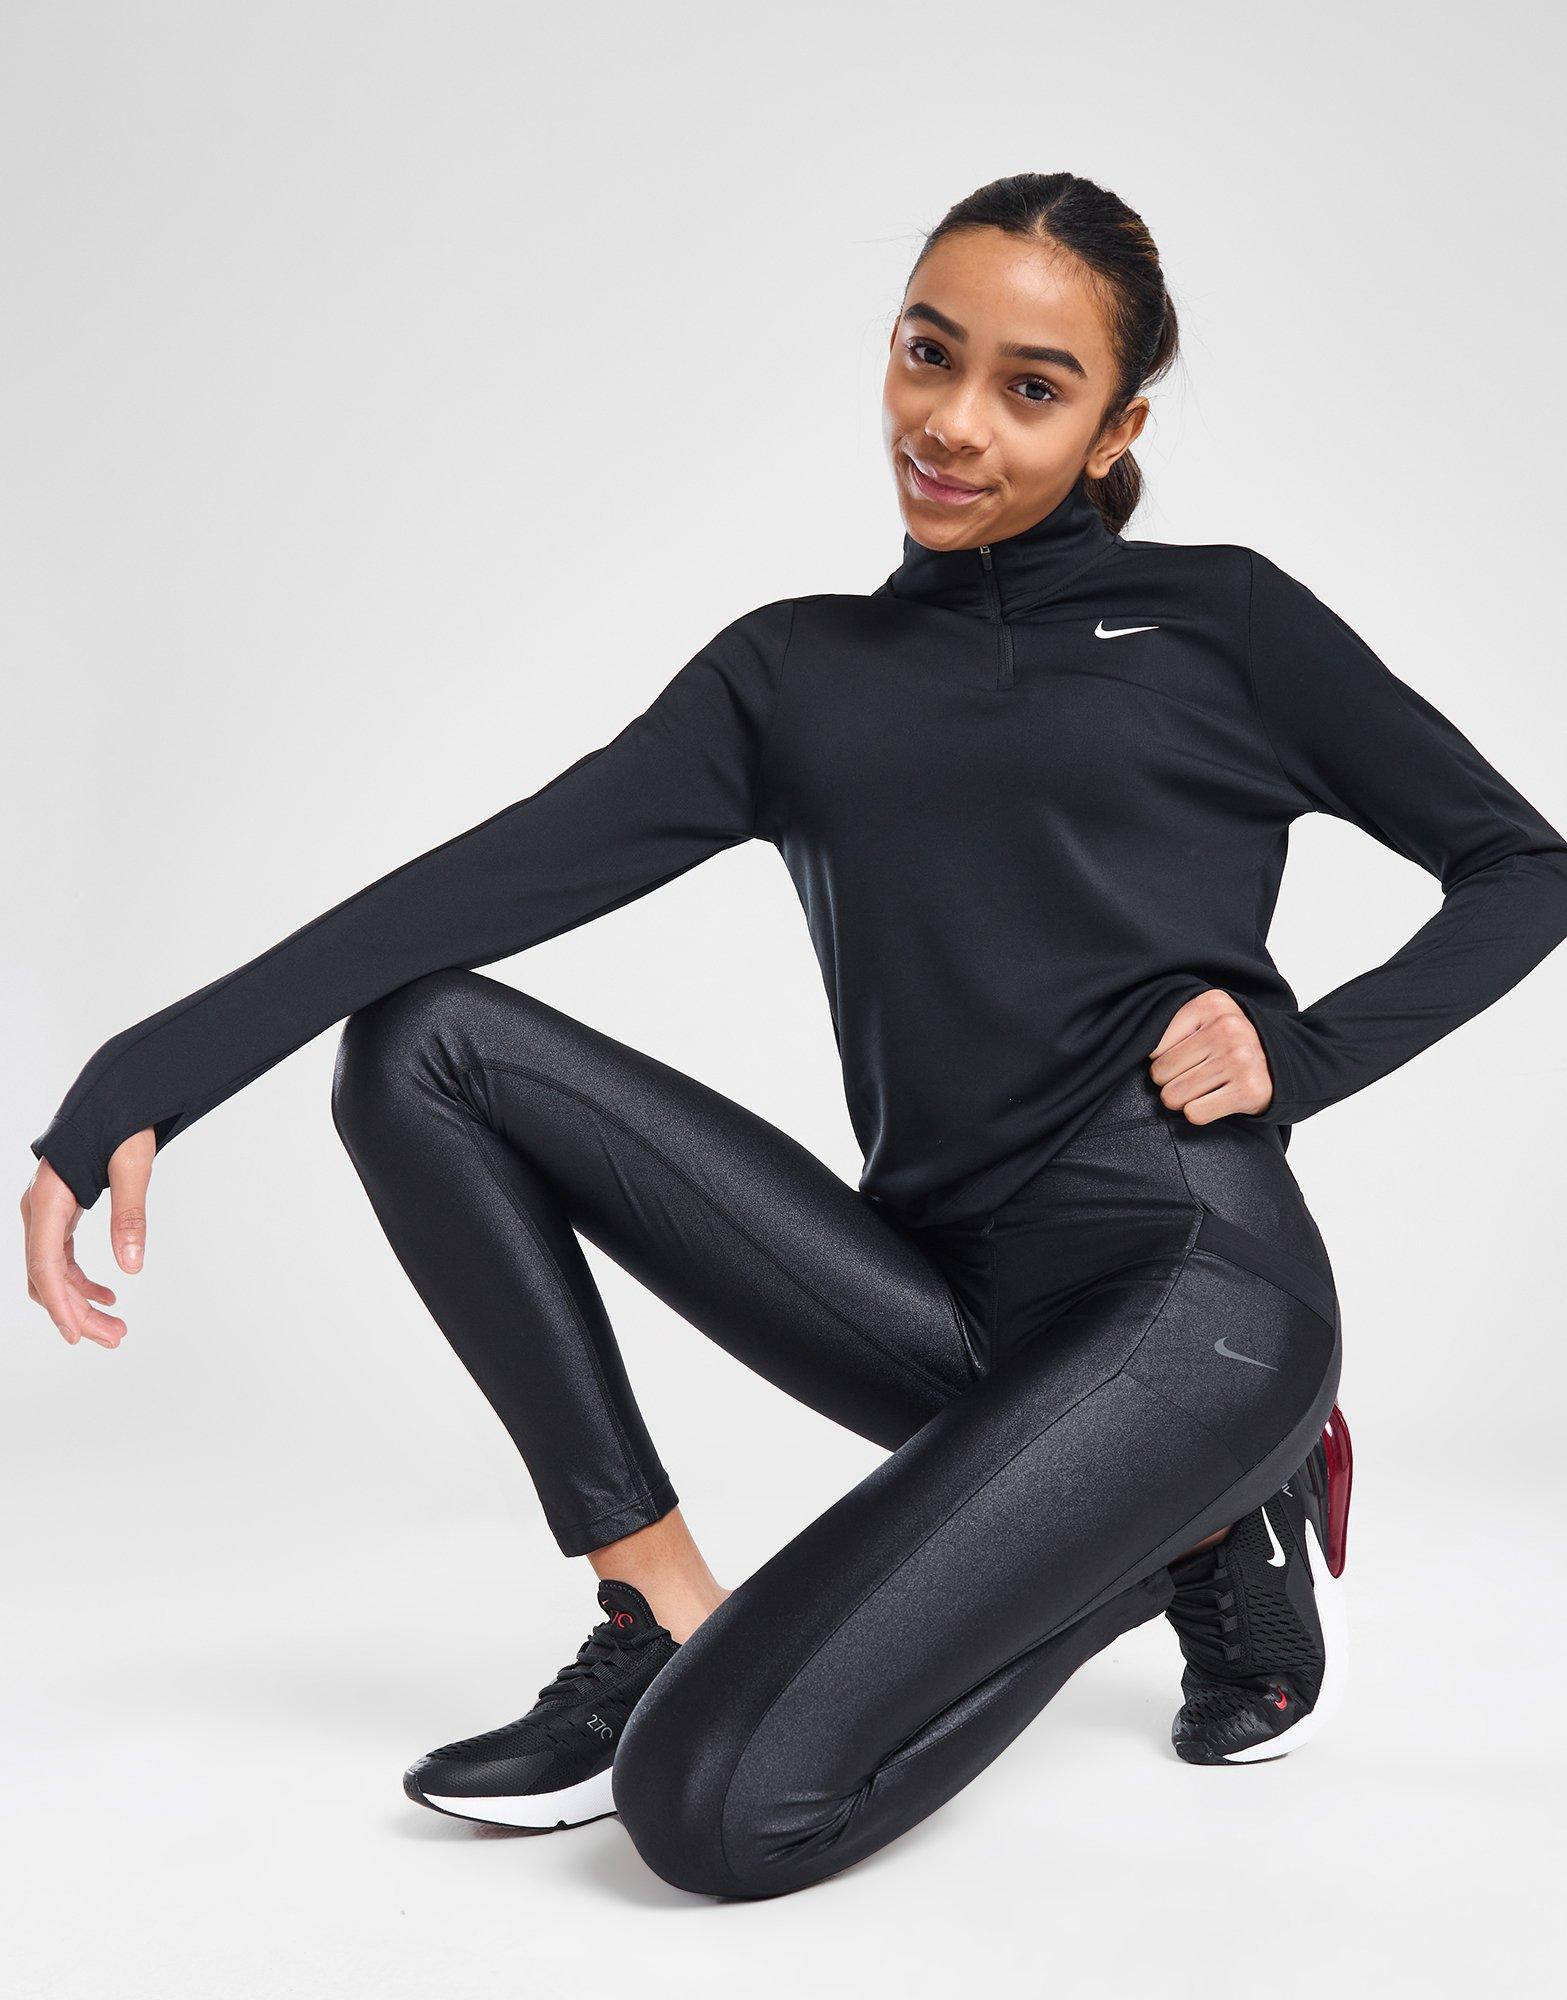 Nike Womens Sparkle 7/8 Tights - Black/Black - Womens Clothing